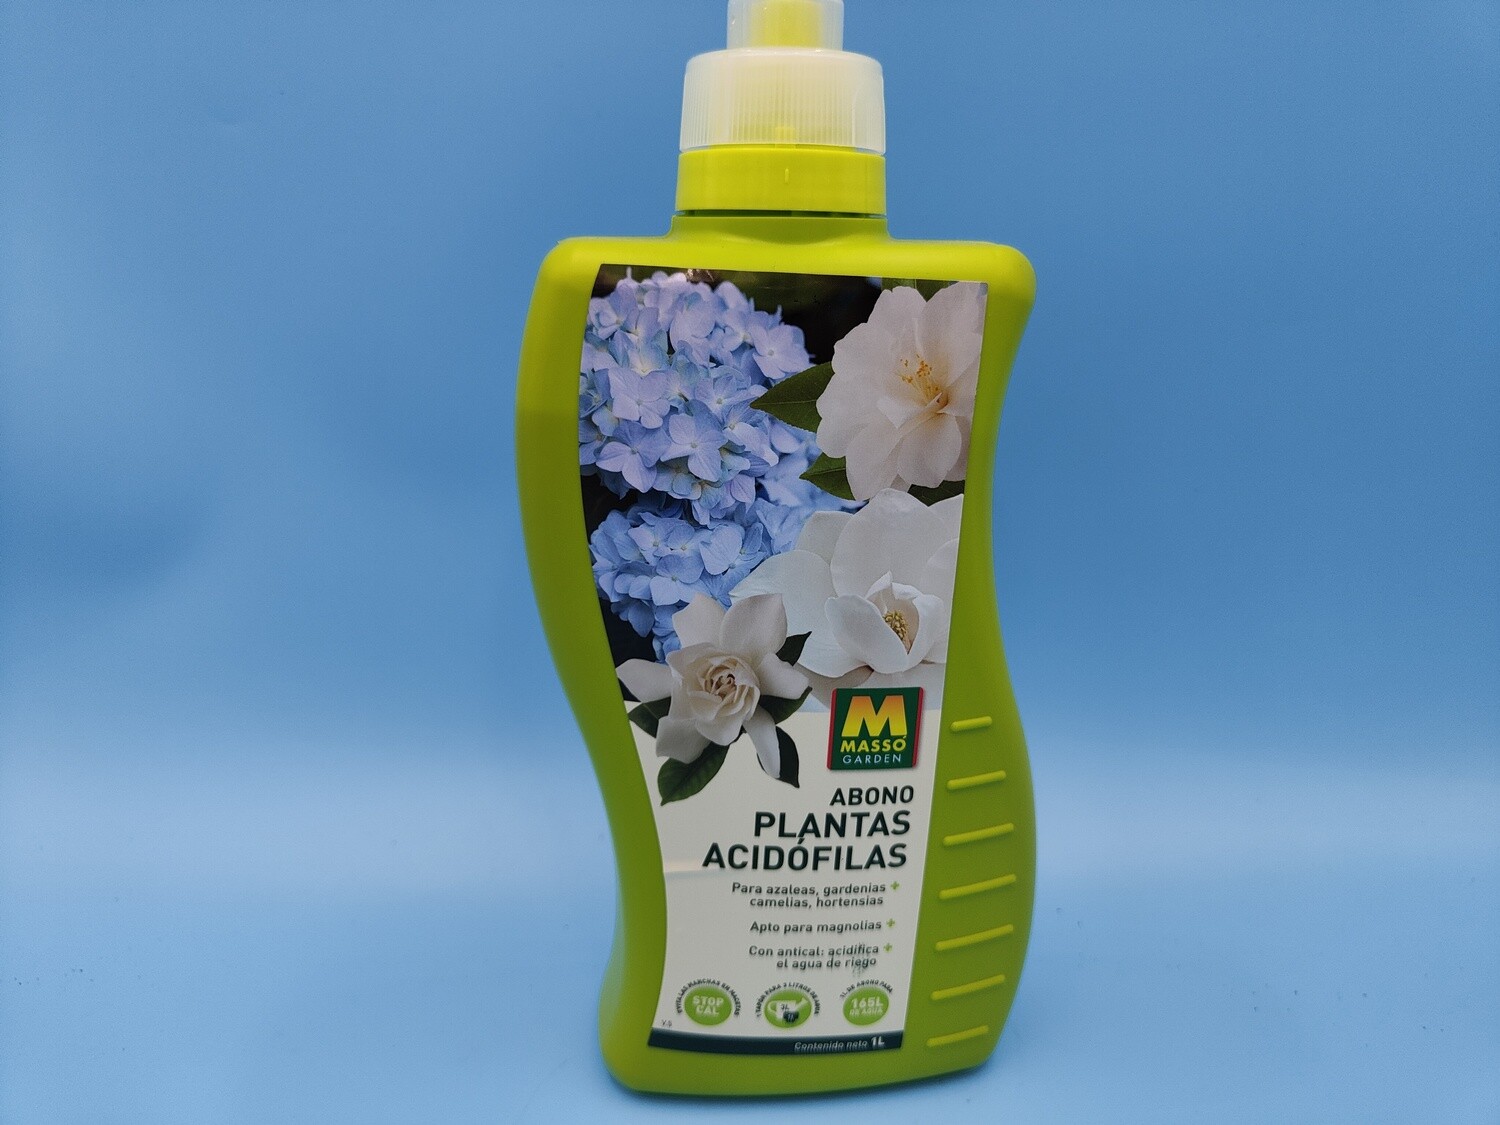 "AmaPlant Abono Plantas Acidofilas" liquido para azaleas, gardenias, camelias, hortensias, apto para magnolias, con antical: acidifica el agua de riego 1 litro